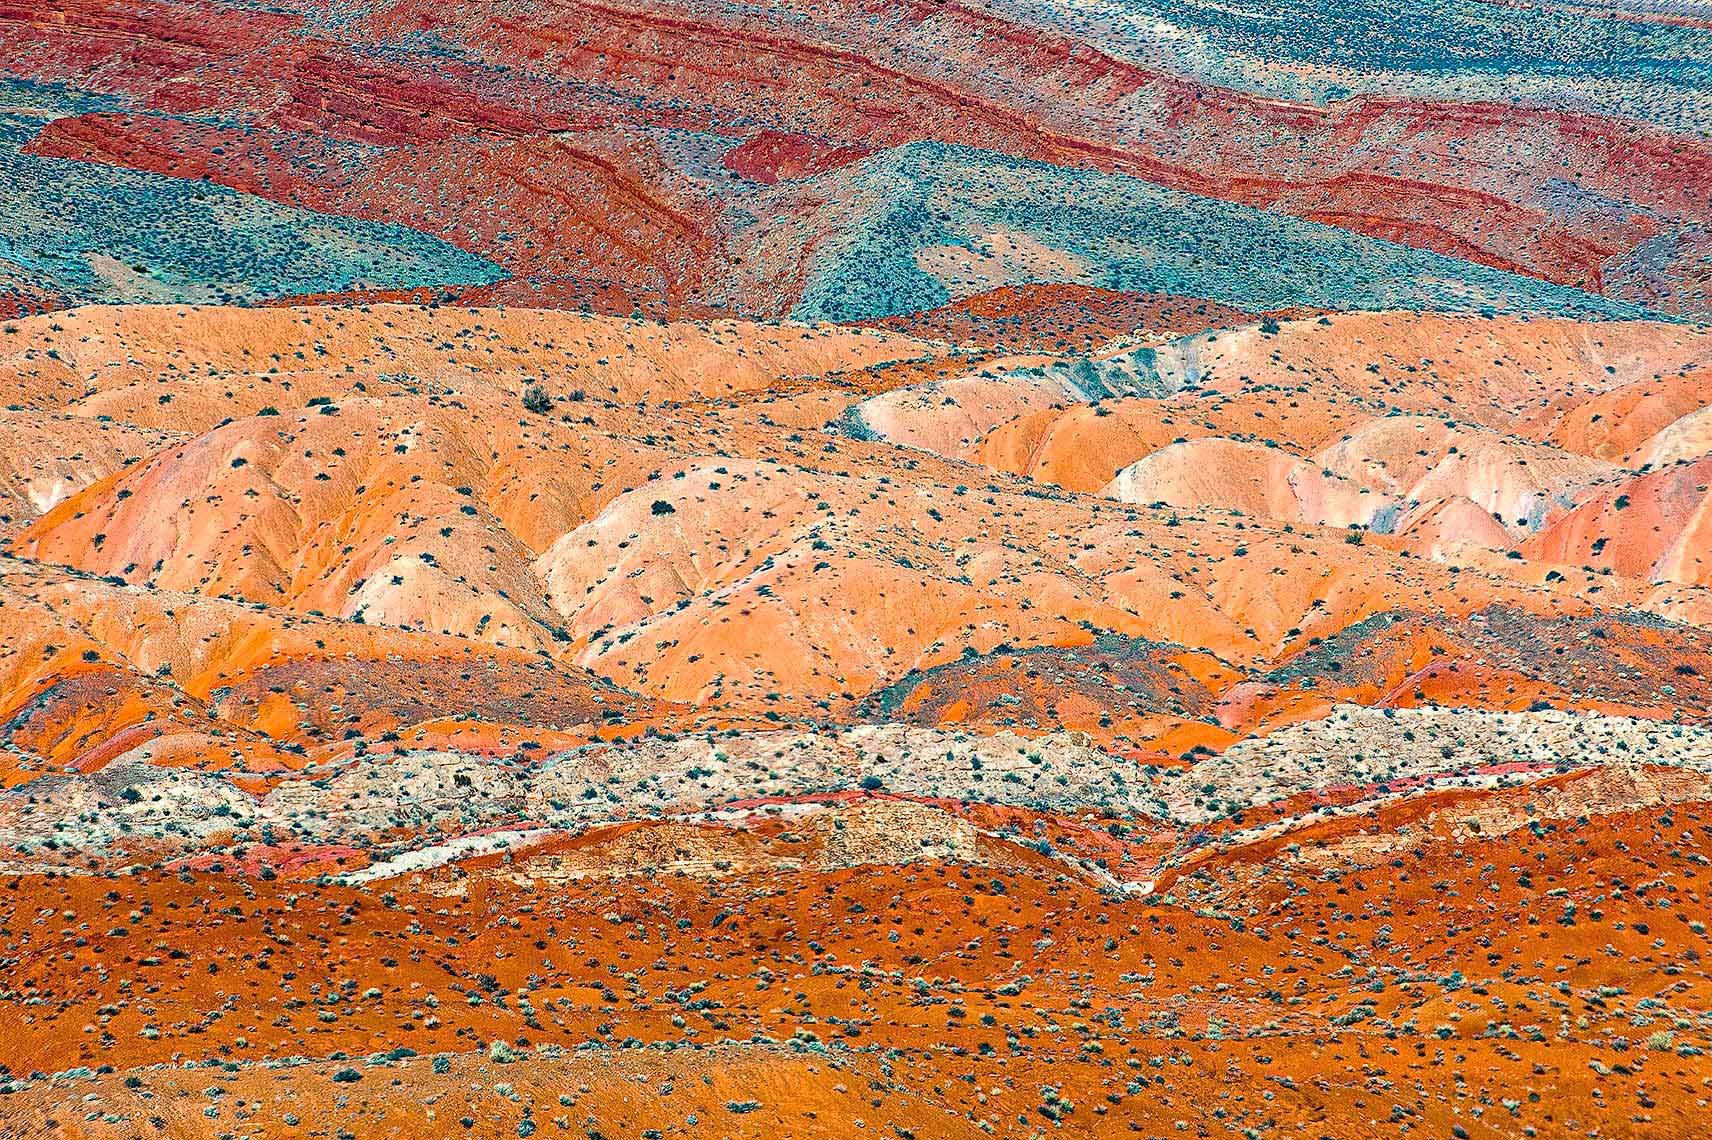 Landscape Photography Rocks Utah